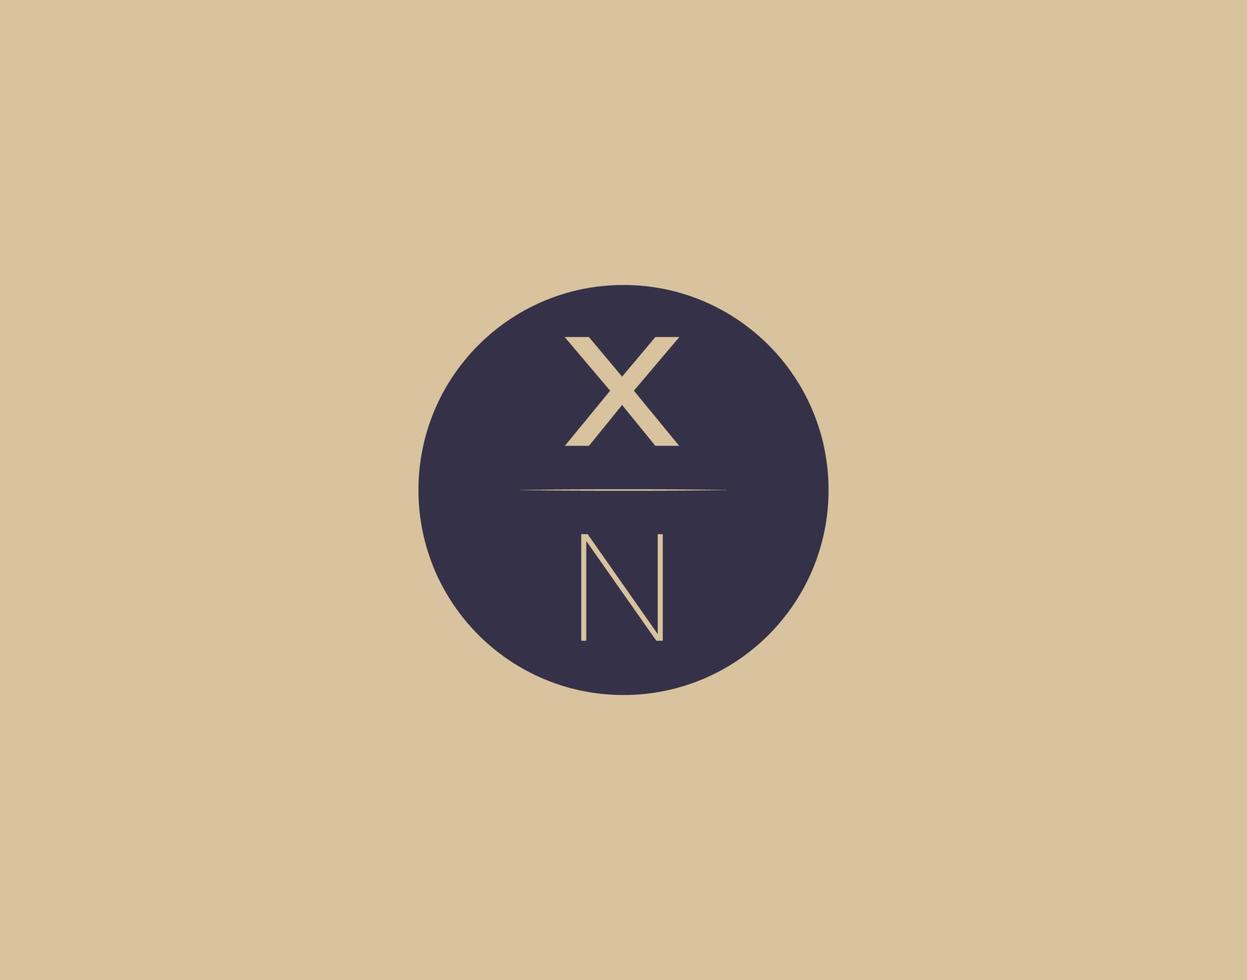 xn brev modern elegant logotyp design vektor bilder